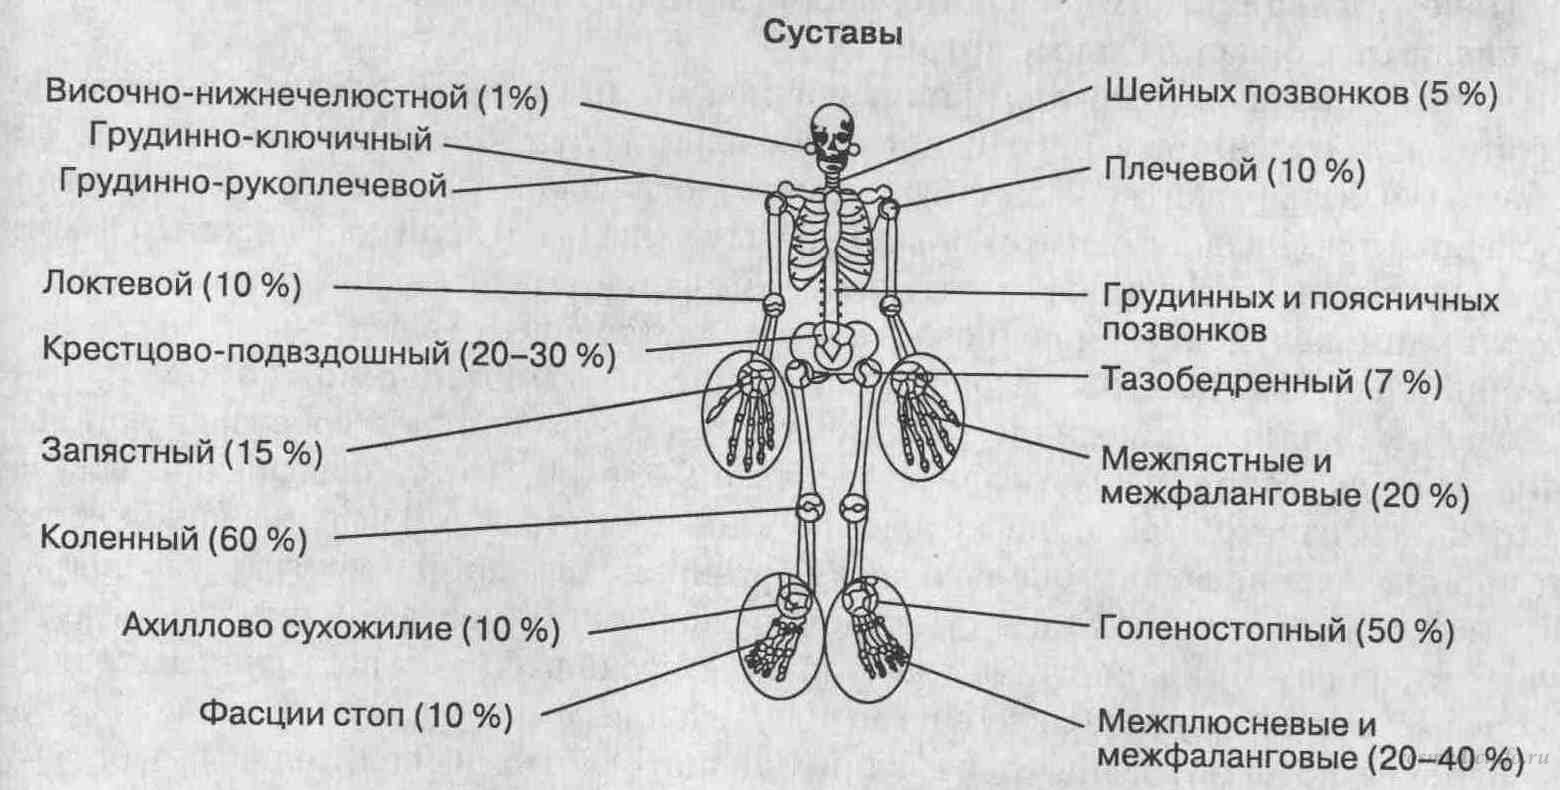 Названия суставов человека. Суставы человека. Название суставов. Название суставов человека. Суставы название анатомия.